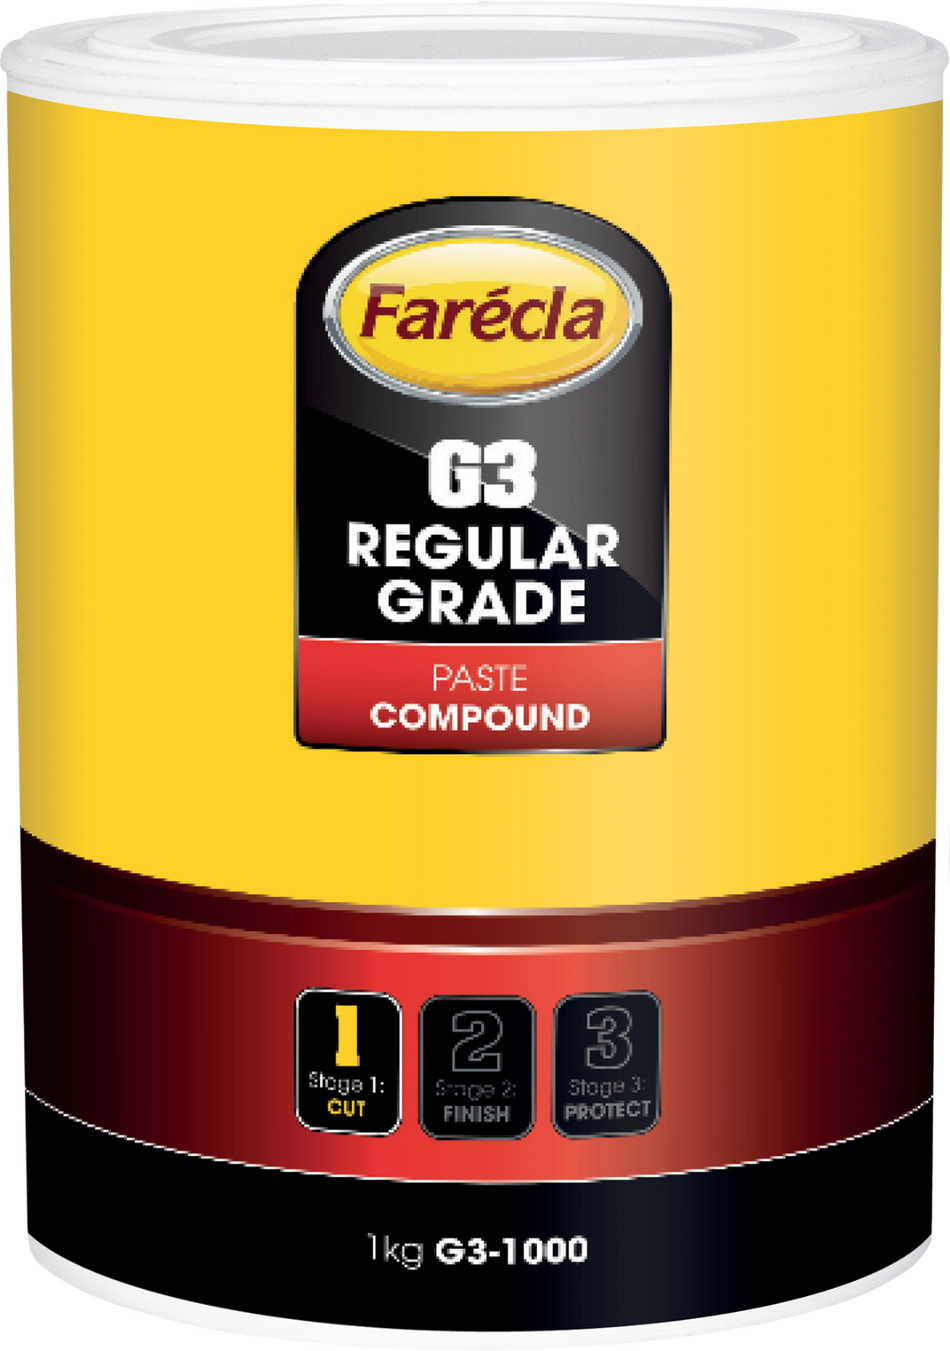 Farecla G3 Regular Grade Paste Compound 1kg